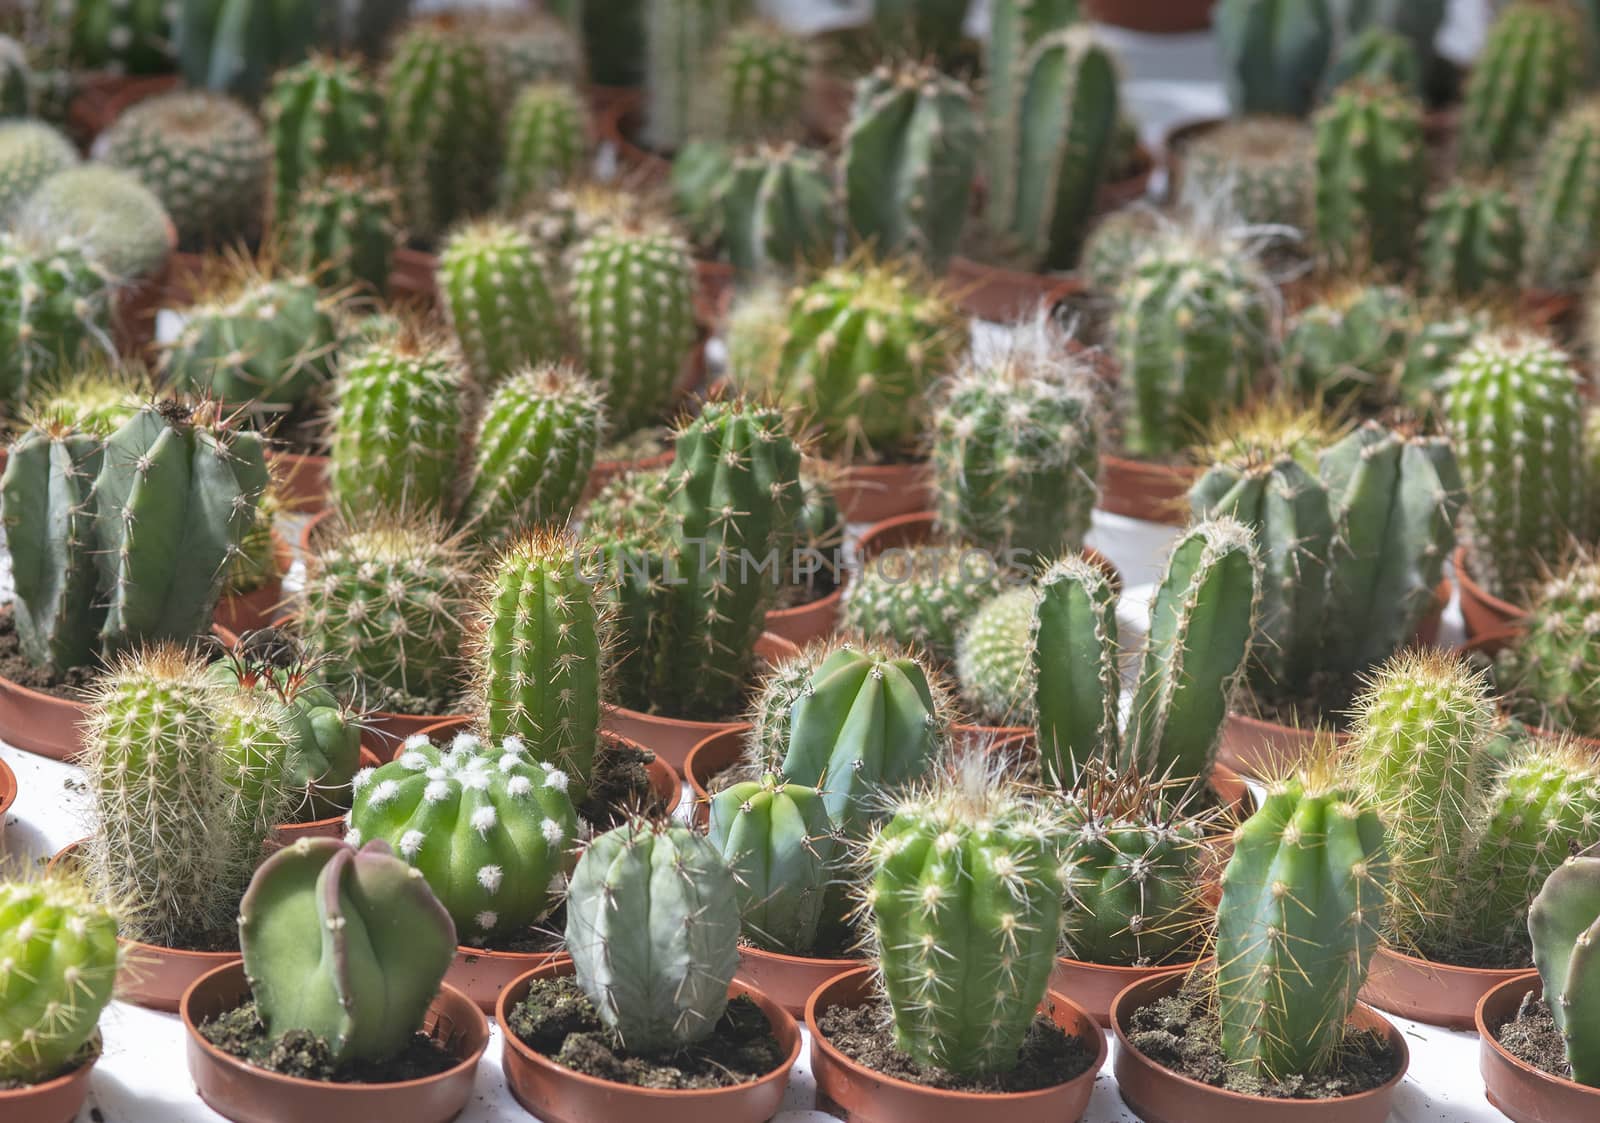 Succulent cactus plants in pots by ArtesiaWells